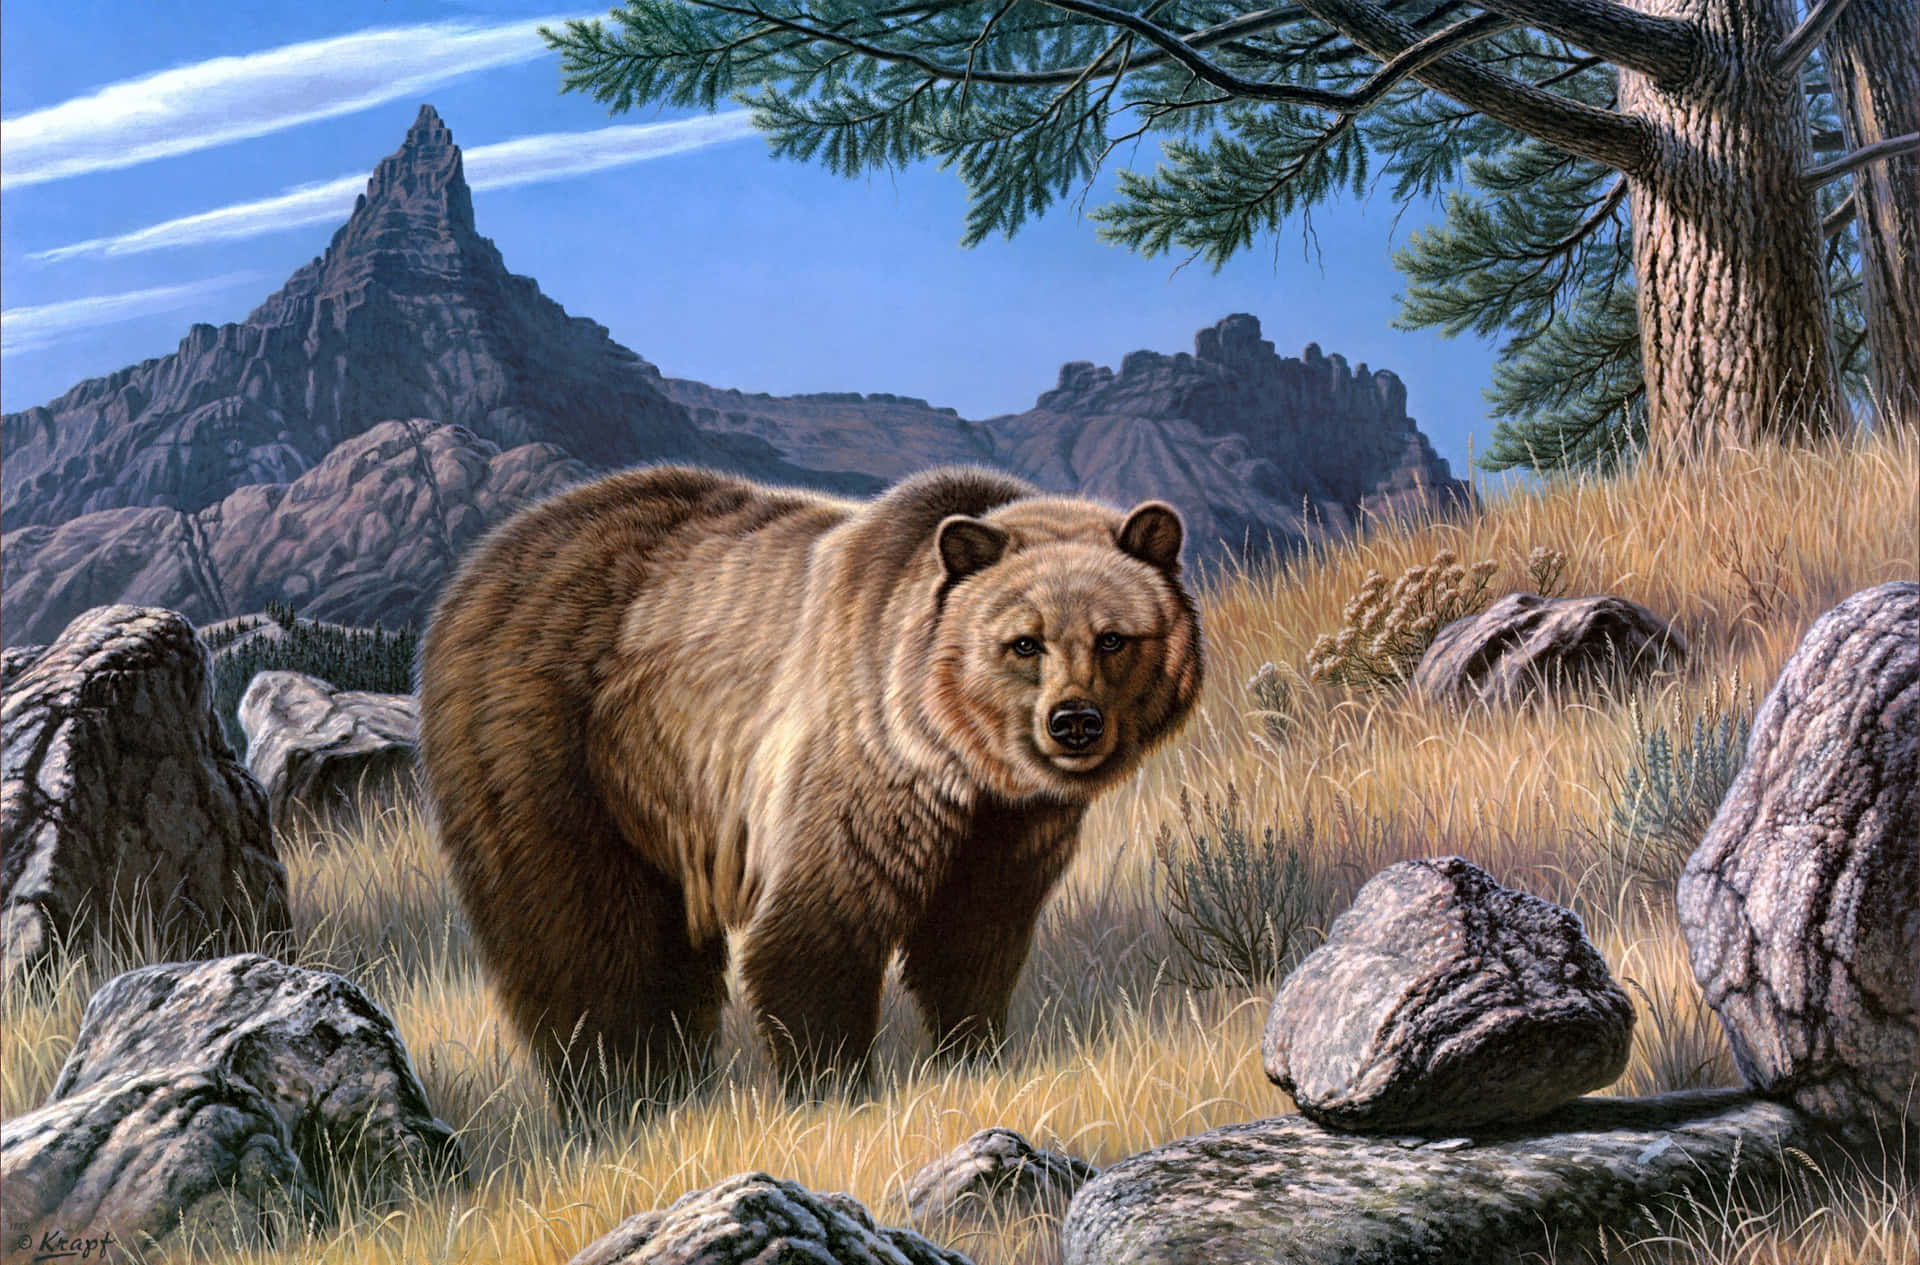 Kodiak Bear Wandering in its Habitat